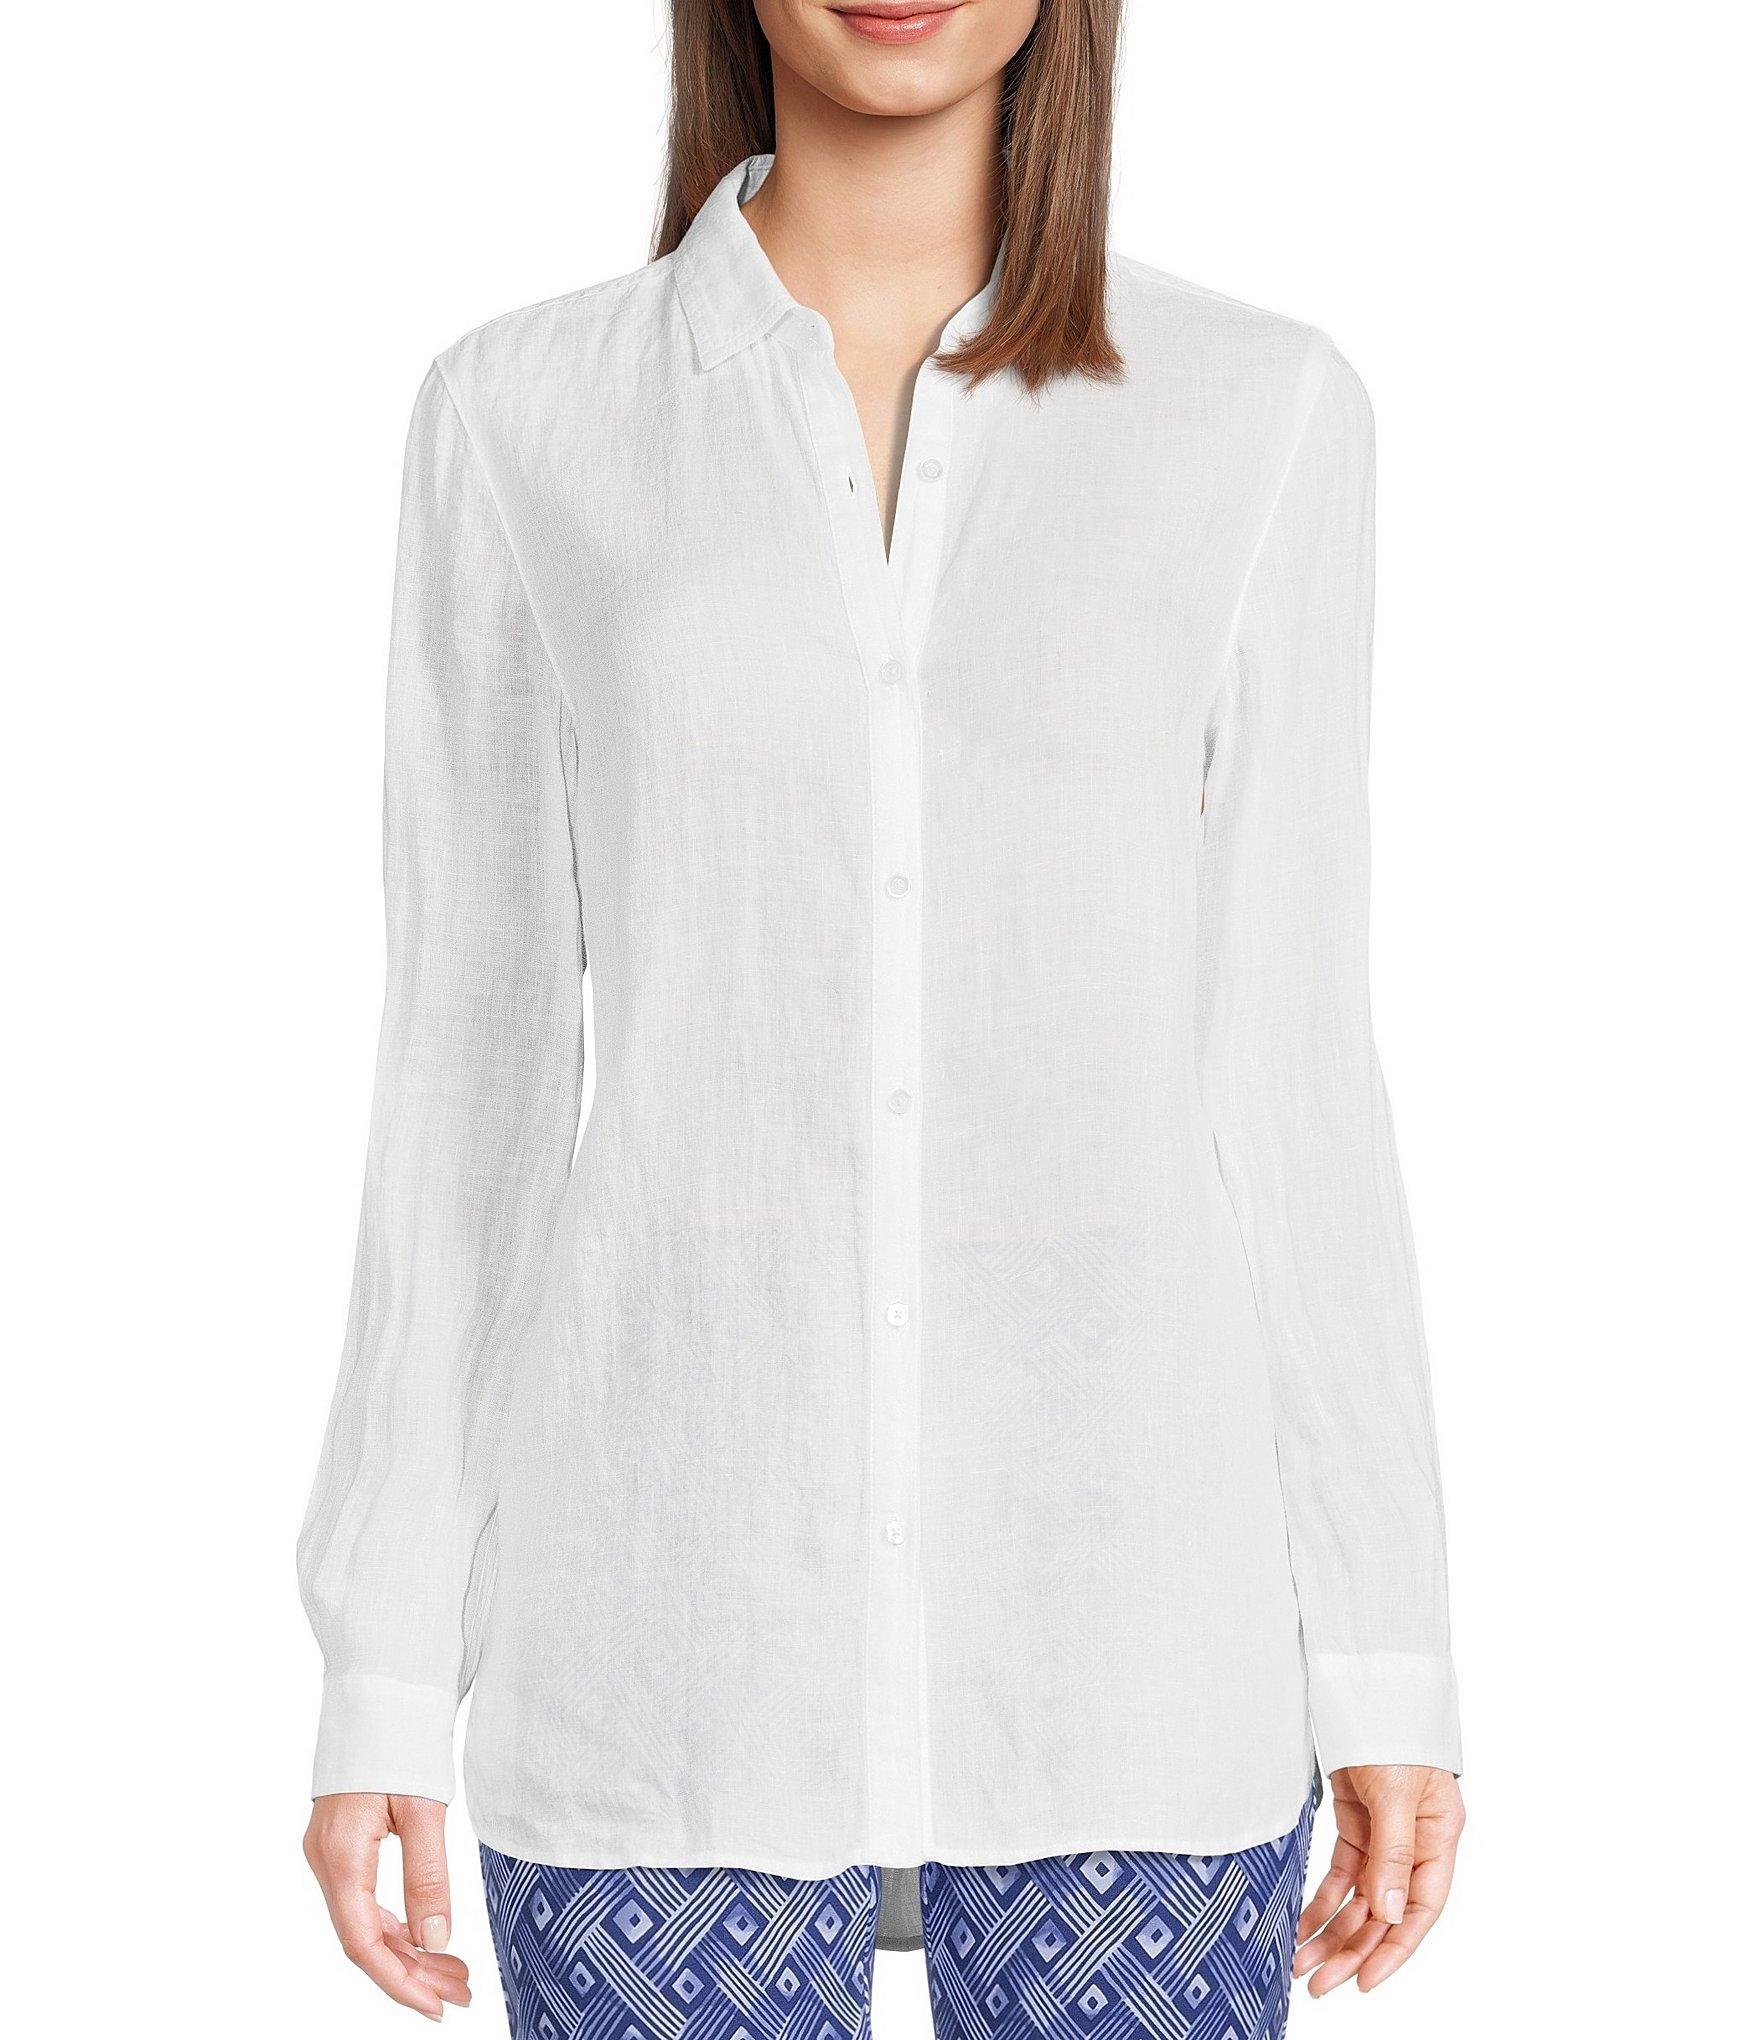 J.McLaughlin Long Sleeve Women's Casual & Dressy Tops & Blouses | Dillard's